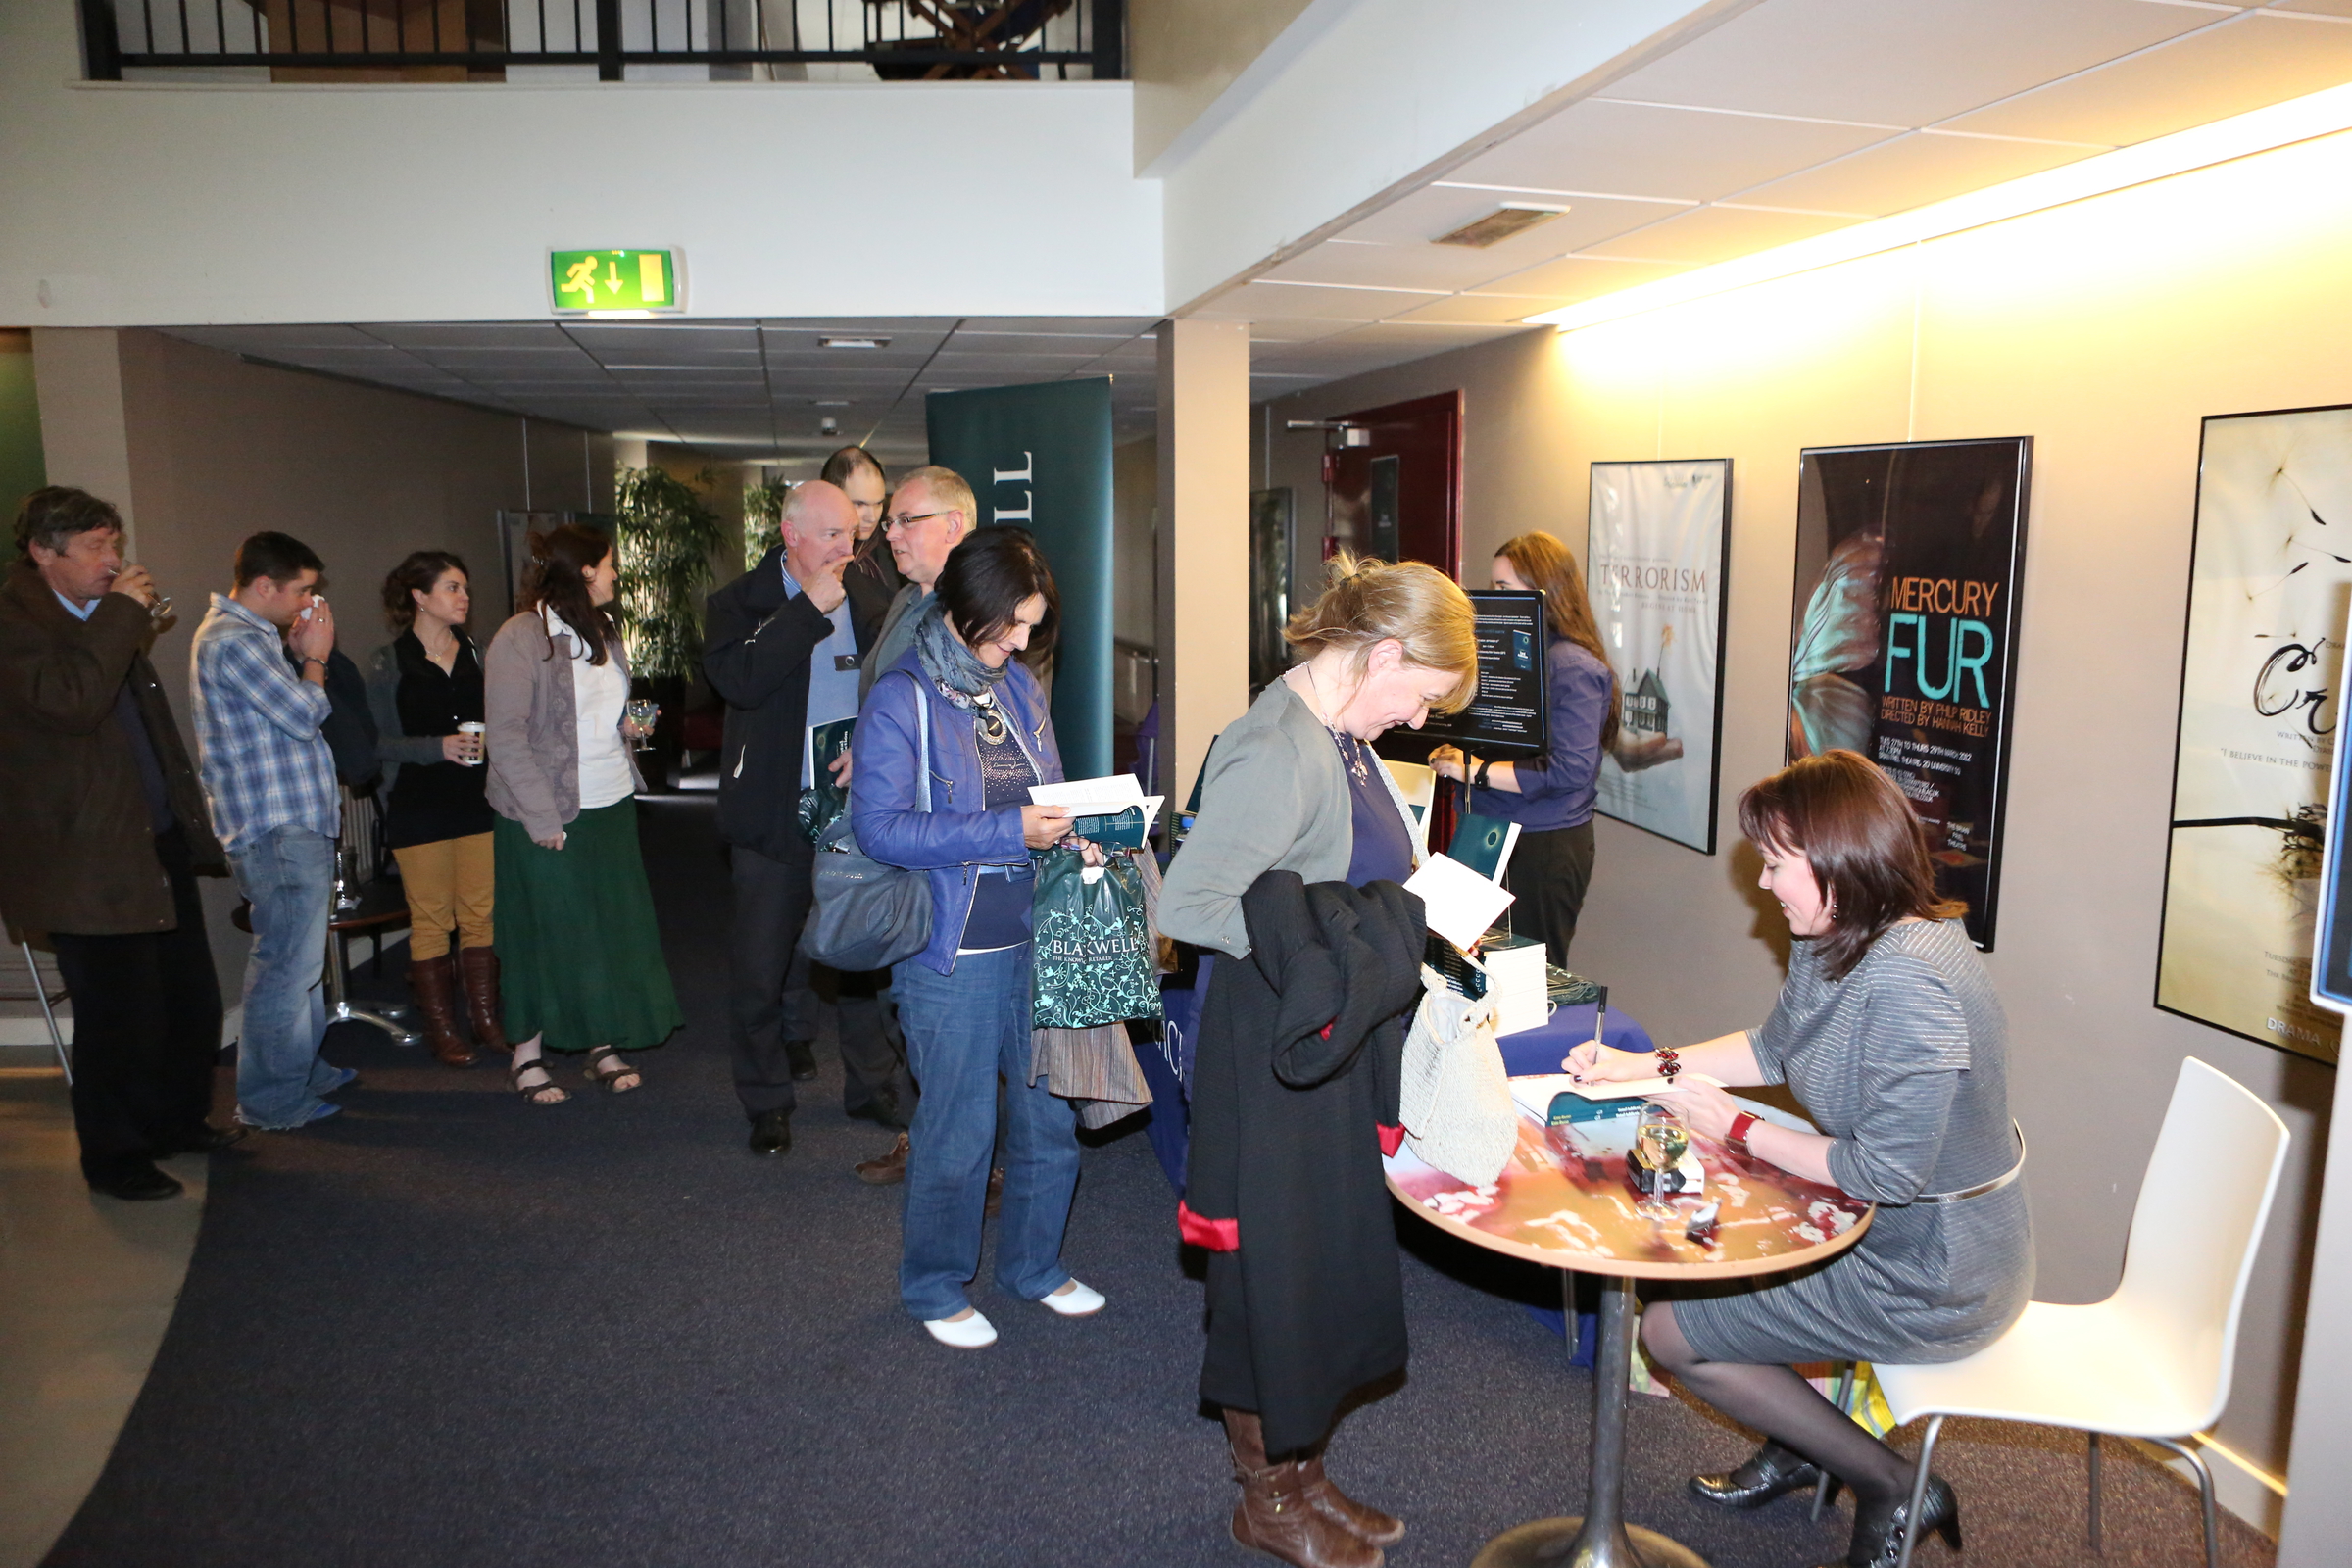 Belfast book launch party. (c) 2012, Paul McErlane